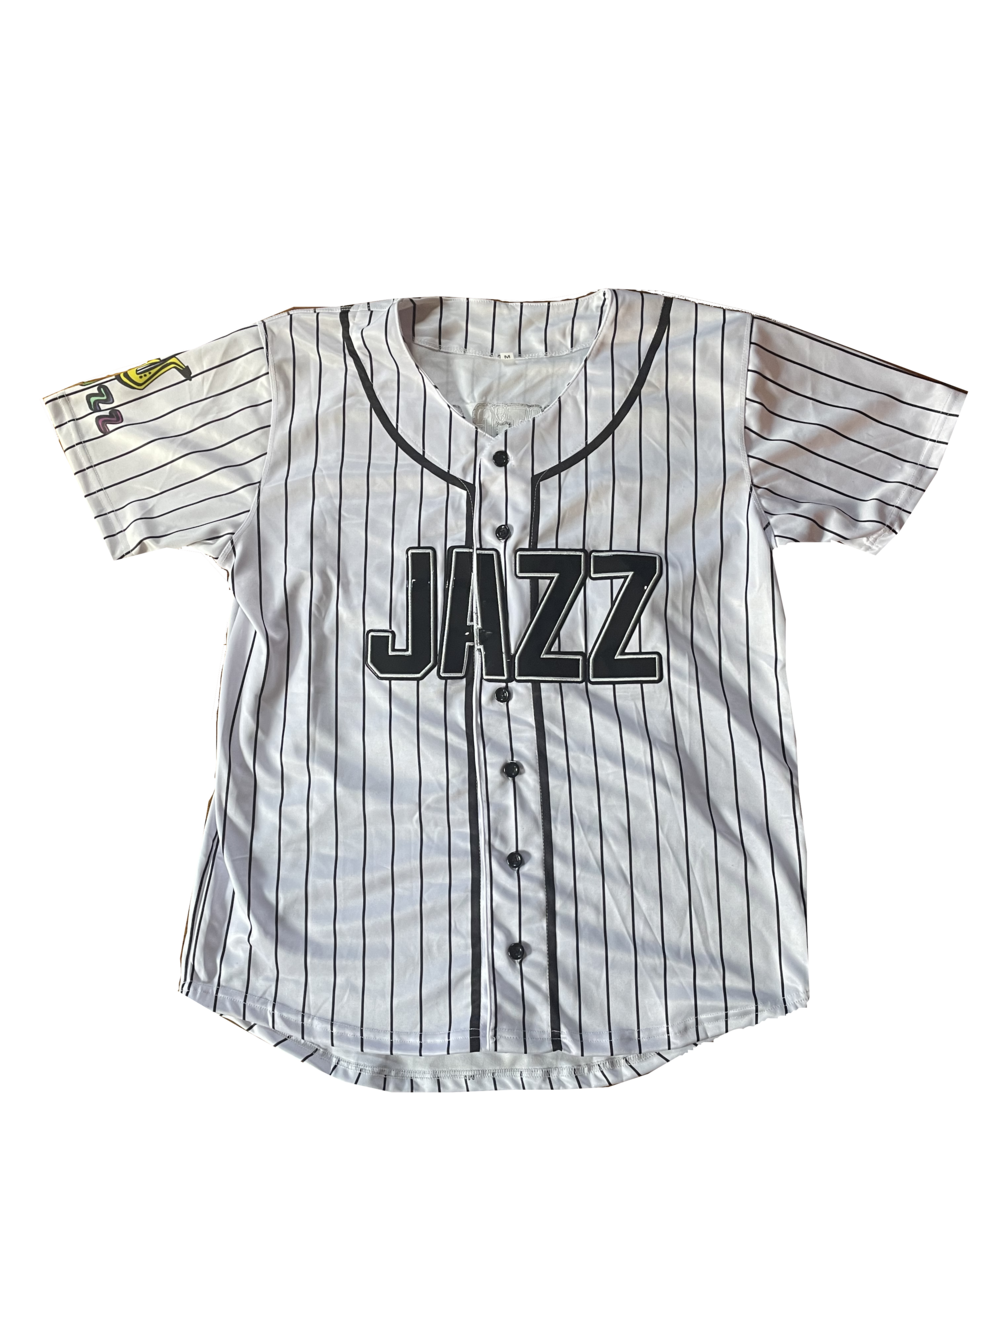 jazz black and white jersey